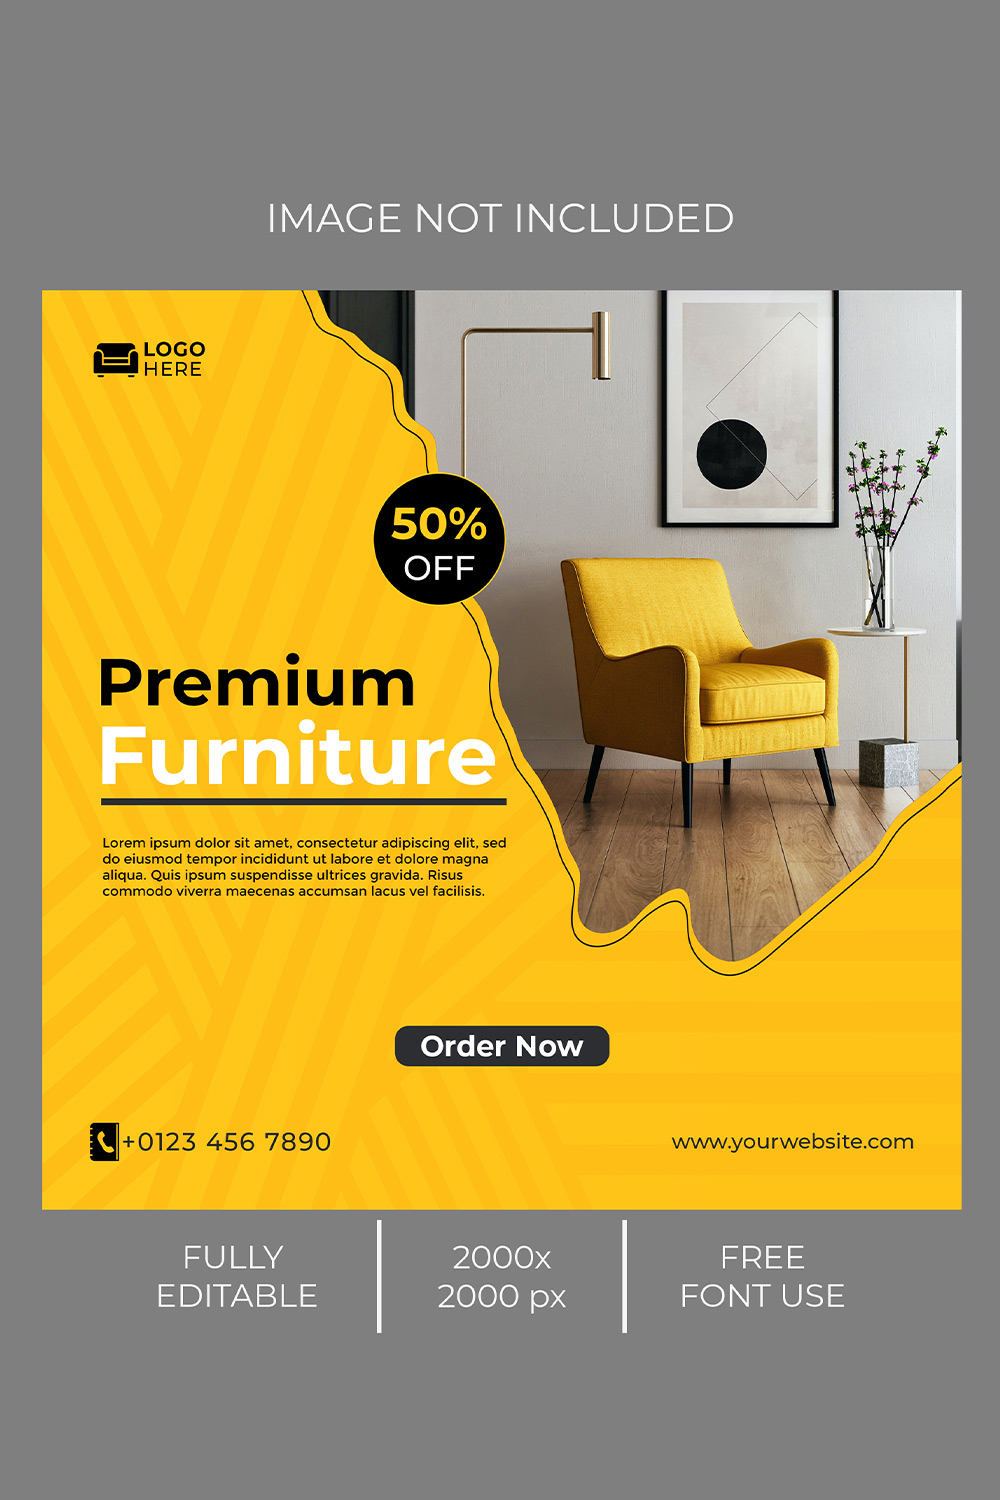 Premium Furniture Sale Instagram Post Template pinterest image.